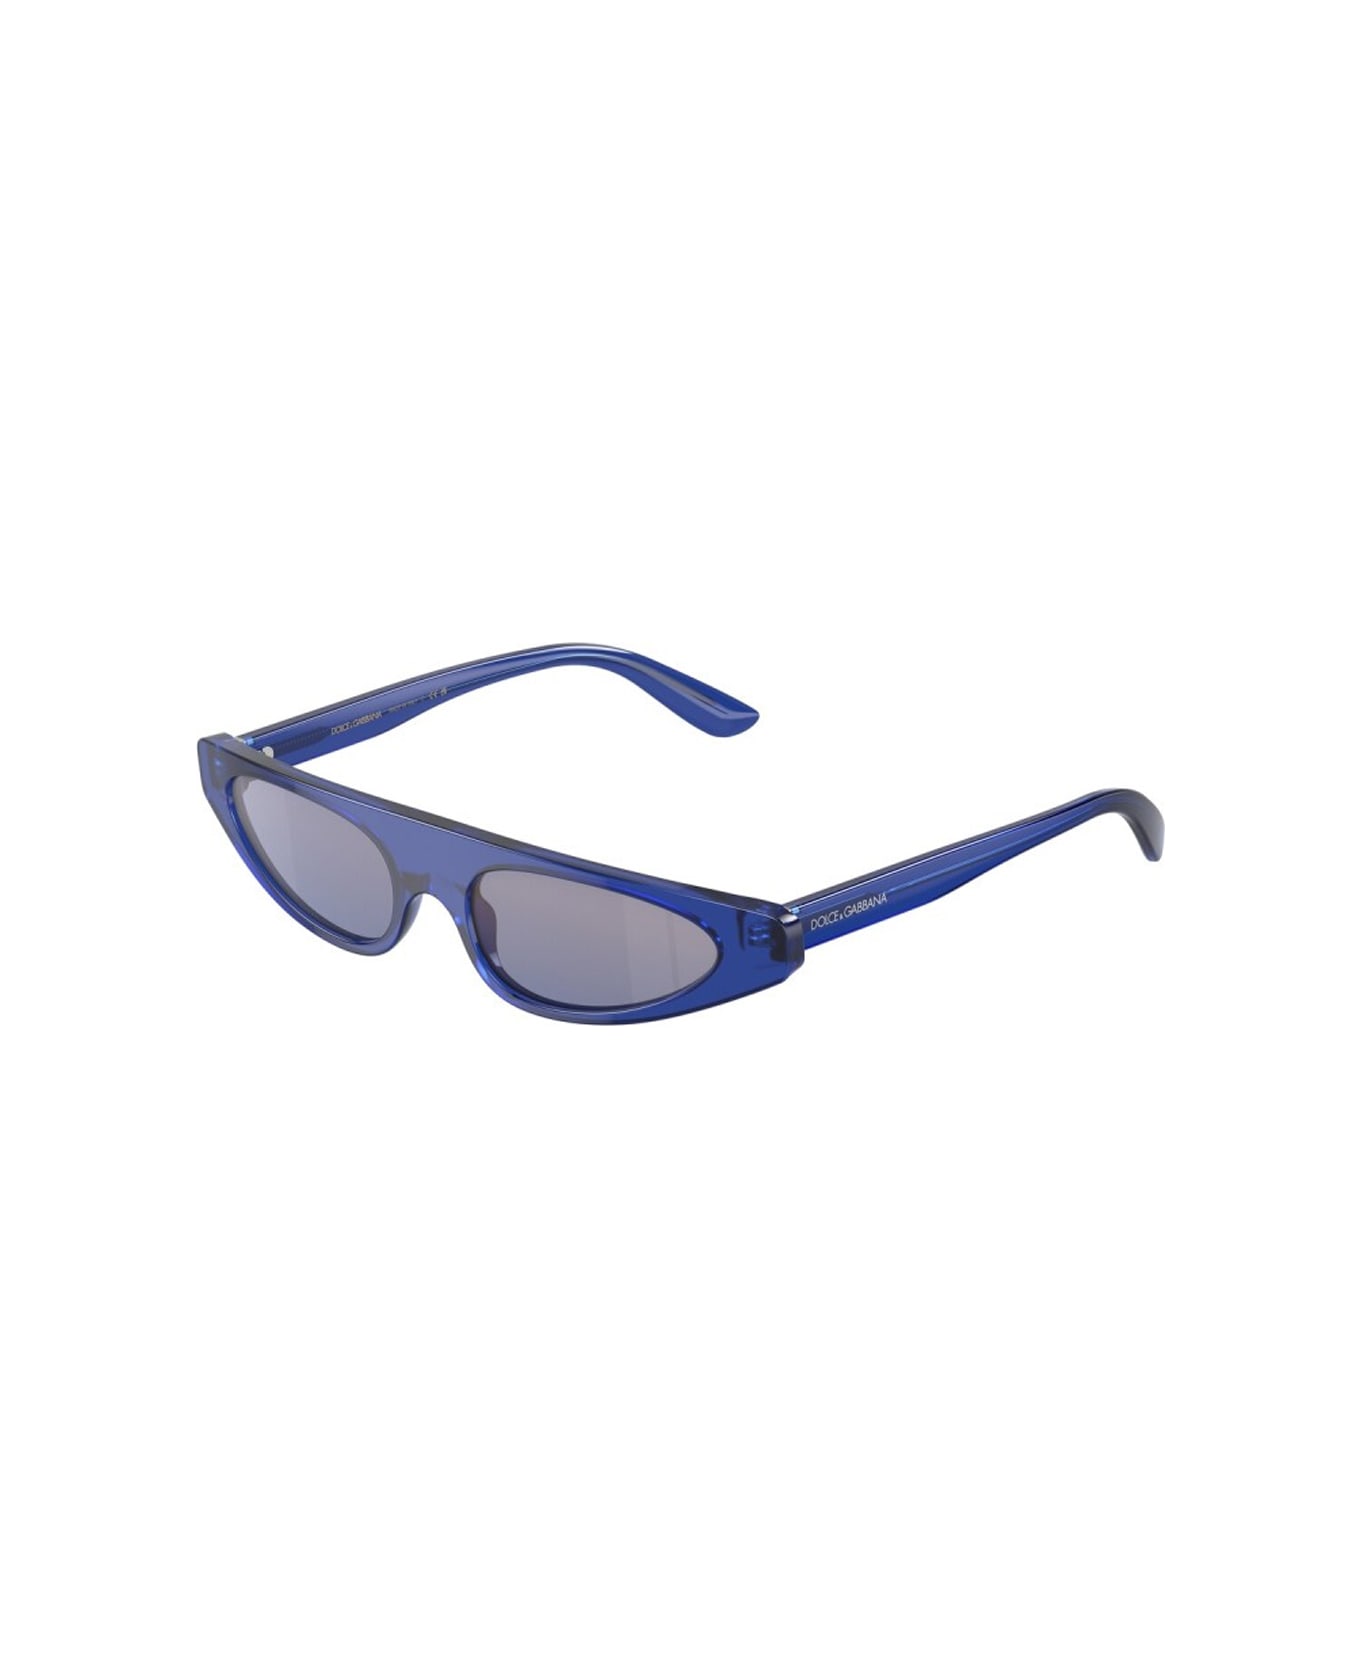 Dolce & Gabbana Eyewear Dg4442 339833 Sunglasses - Blu